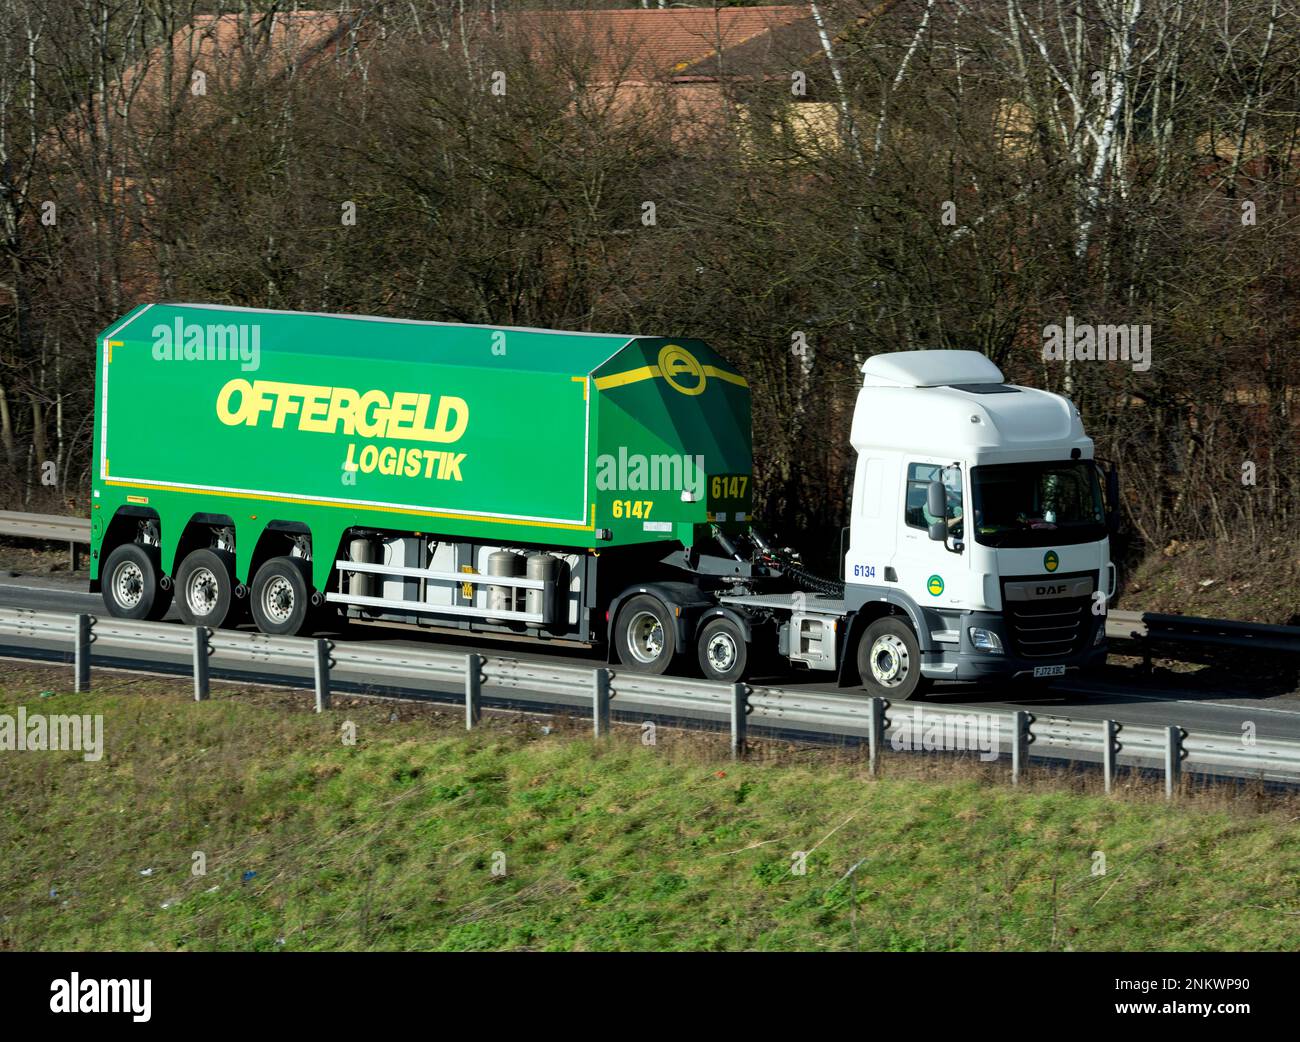 Offergeld Logistik lorry joining the M40 motorway at Junction 15, Warwick, Warwickshire, UK Stock Photo